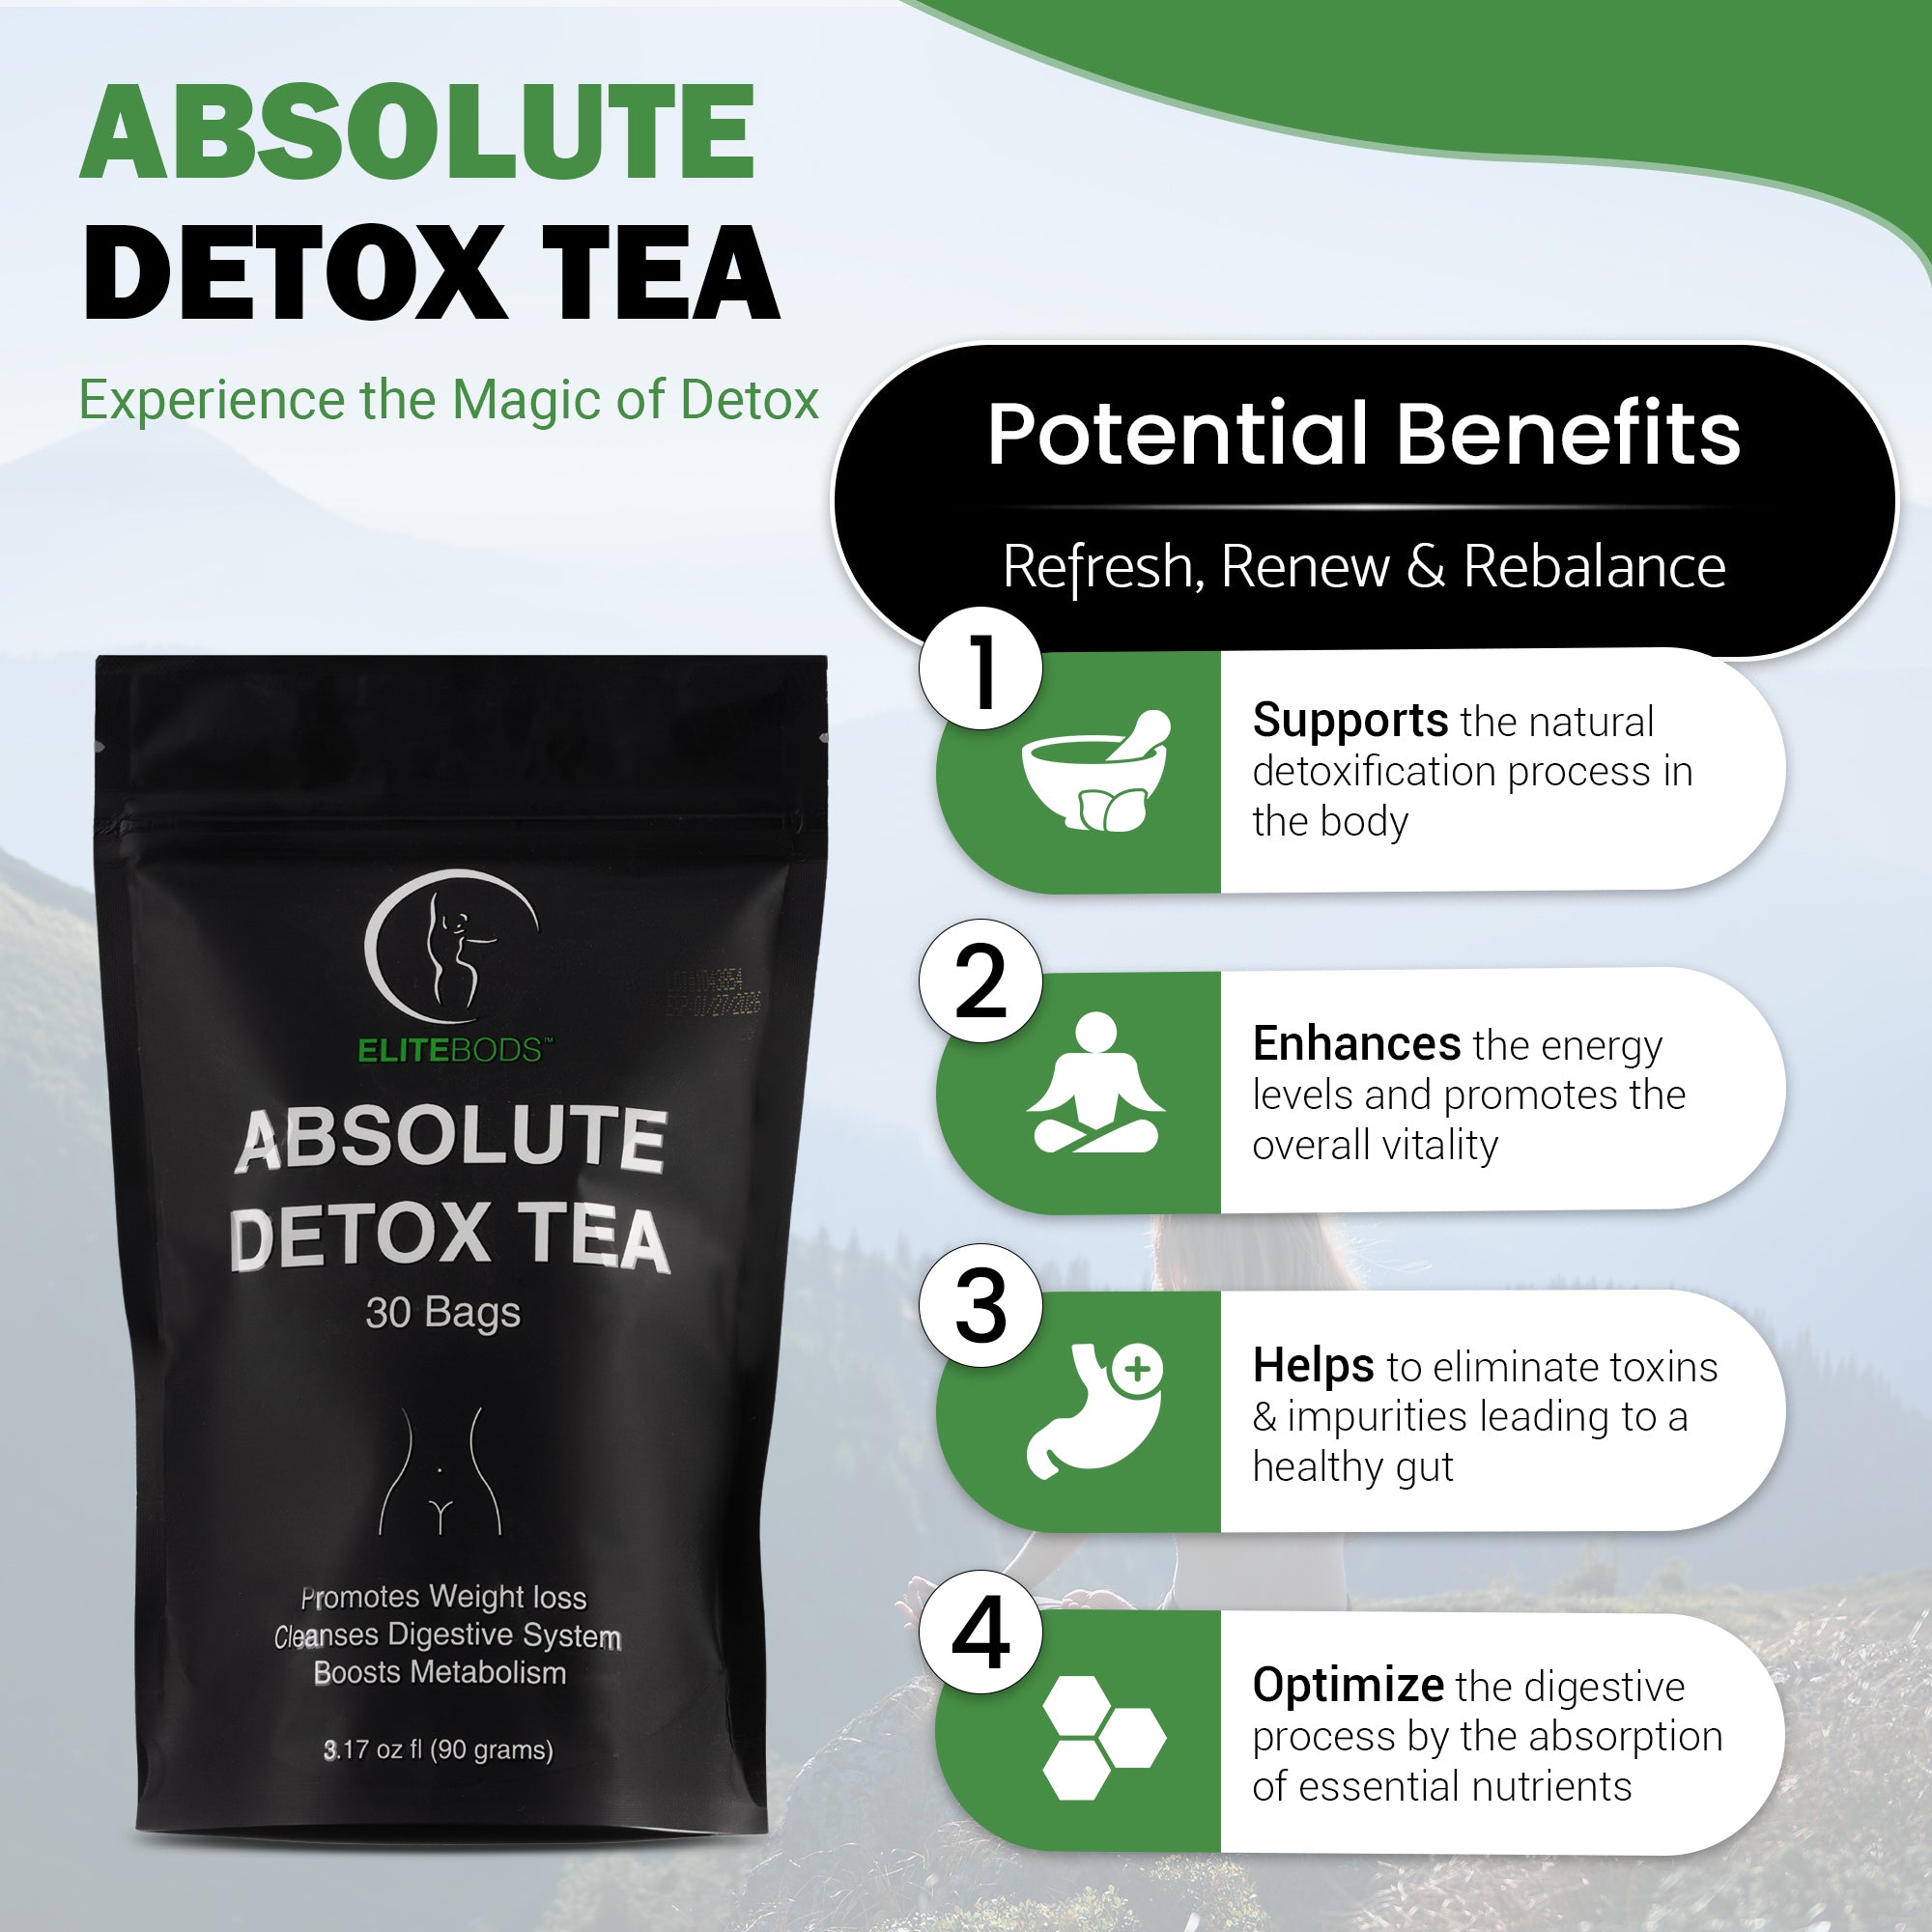 Absolute Detox Tea